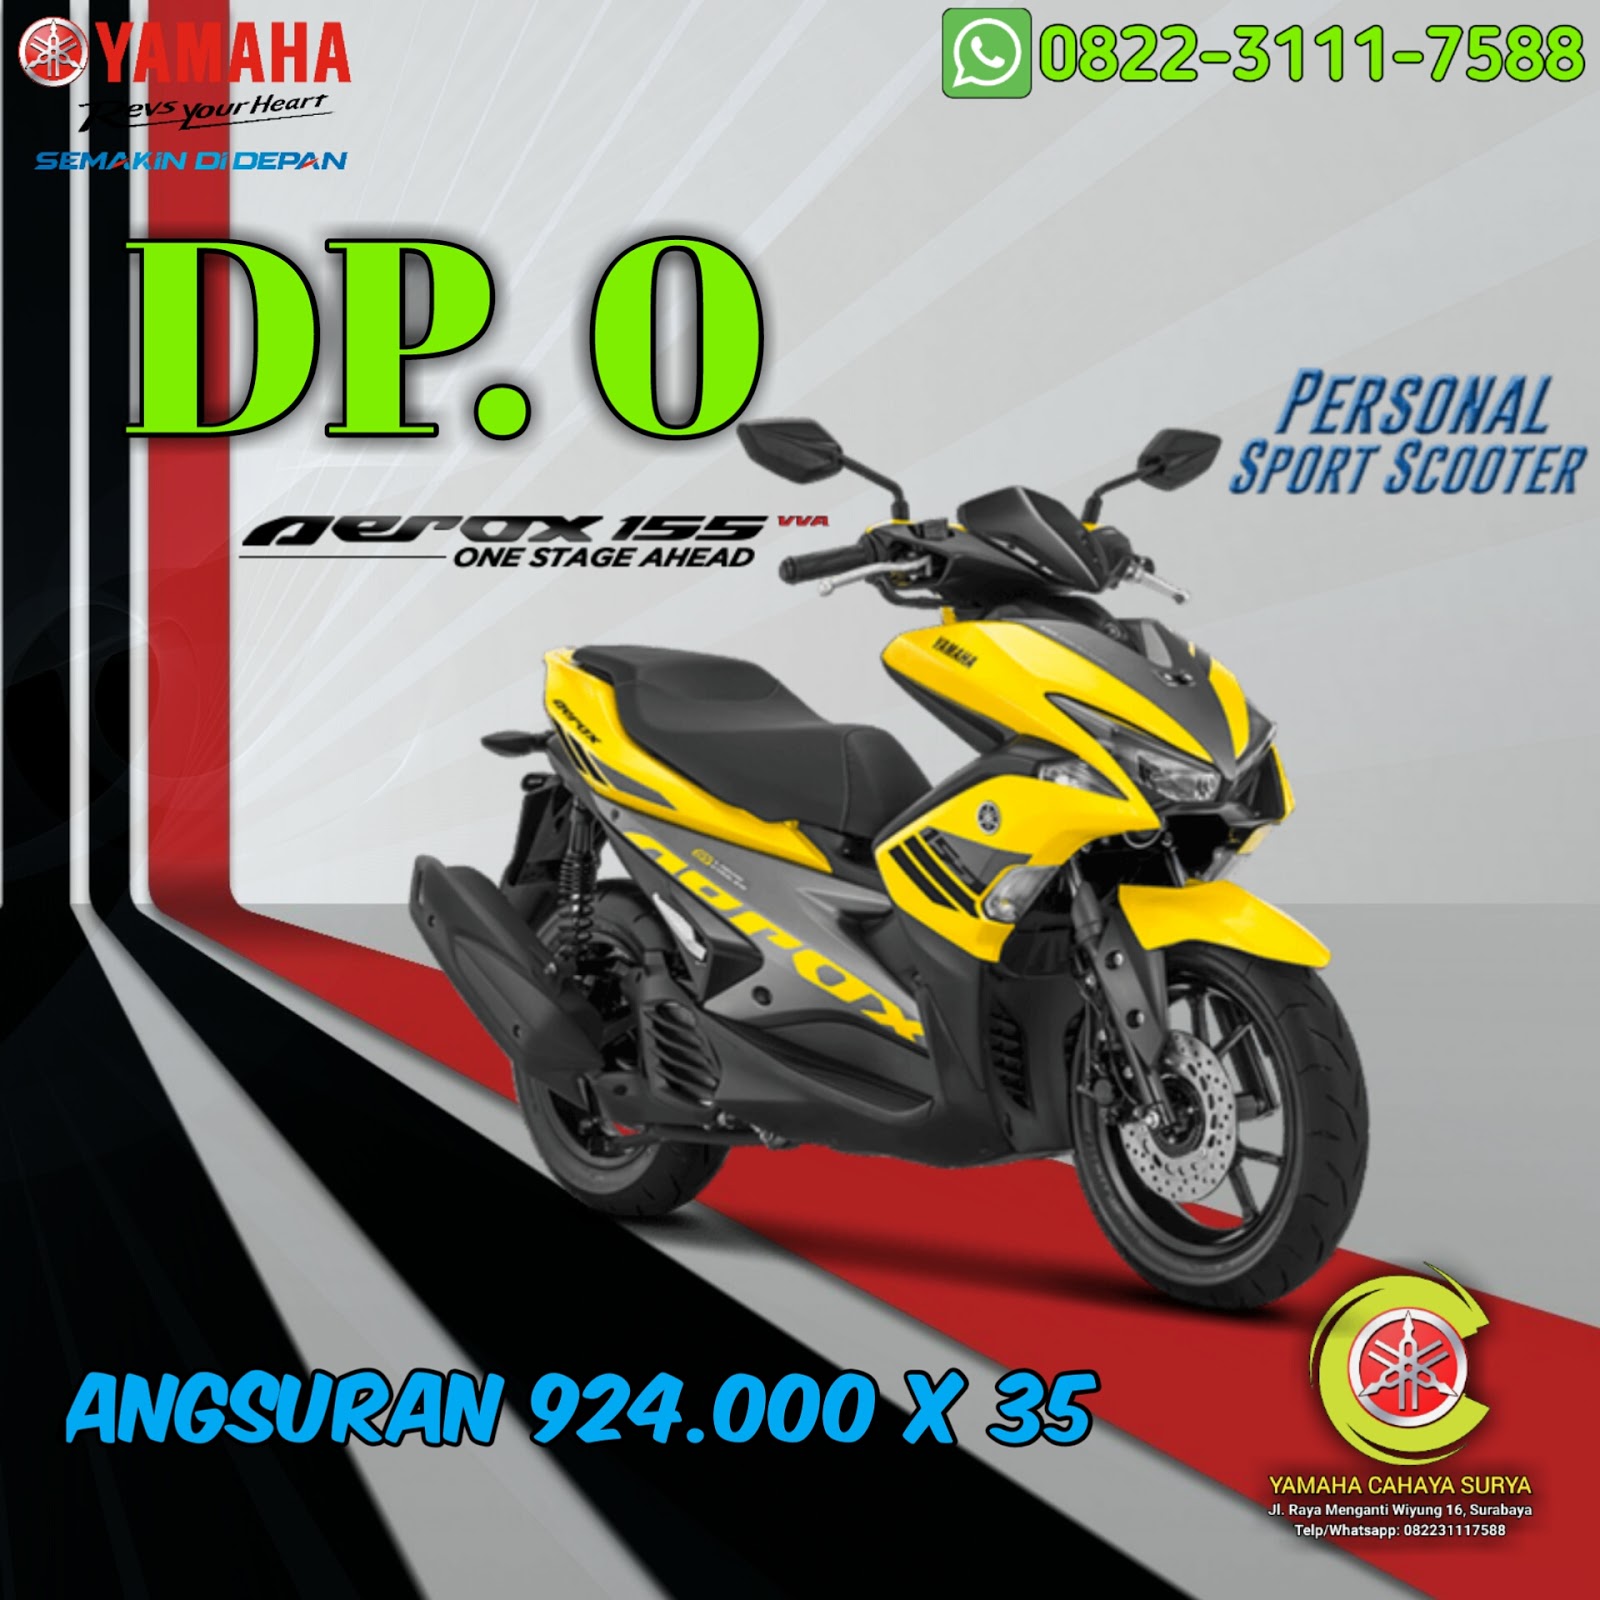 Harga Aerox 155 VVA Surabaya dan Kredit Yamaha Aerox 155 ...